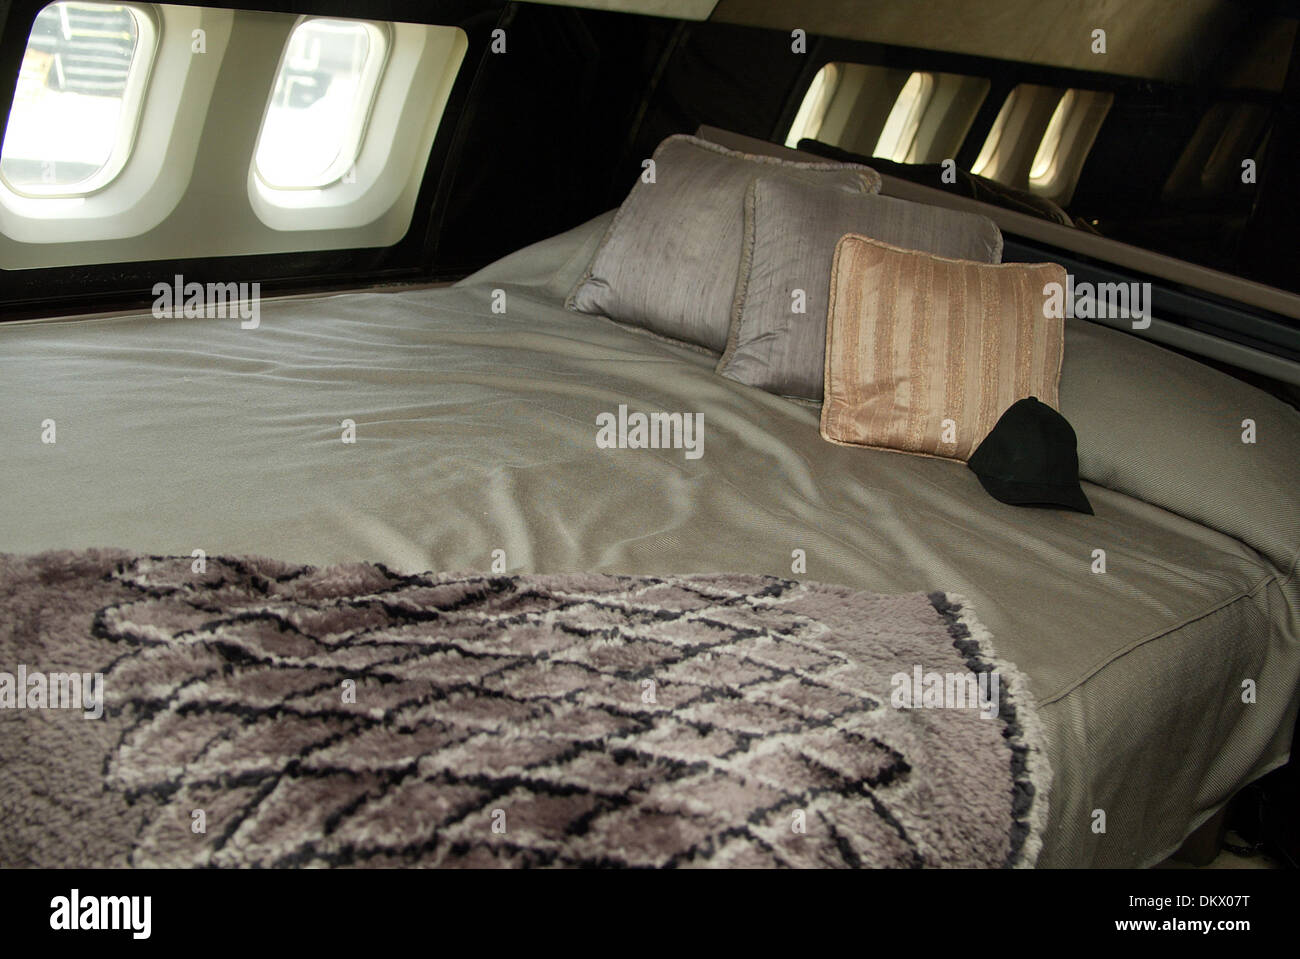 JOHN TRAVOLTA, BED ON HIS JET.ACTORS BEDROOM ON HIS 707 JET. ANGELES, USA.LOS ANGELES AIRPORT [LAX], LOS.24/06/2002.LAB5389. Stock Photo